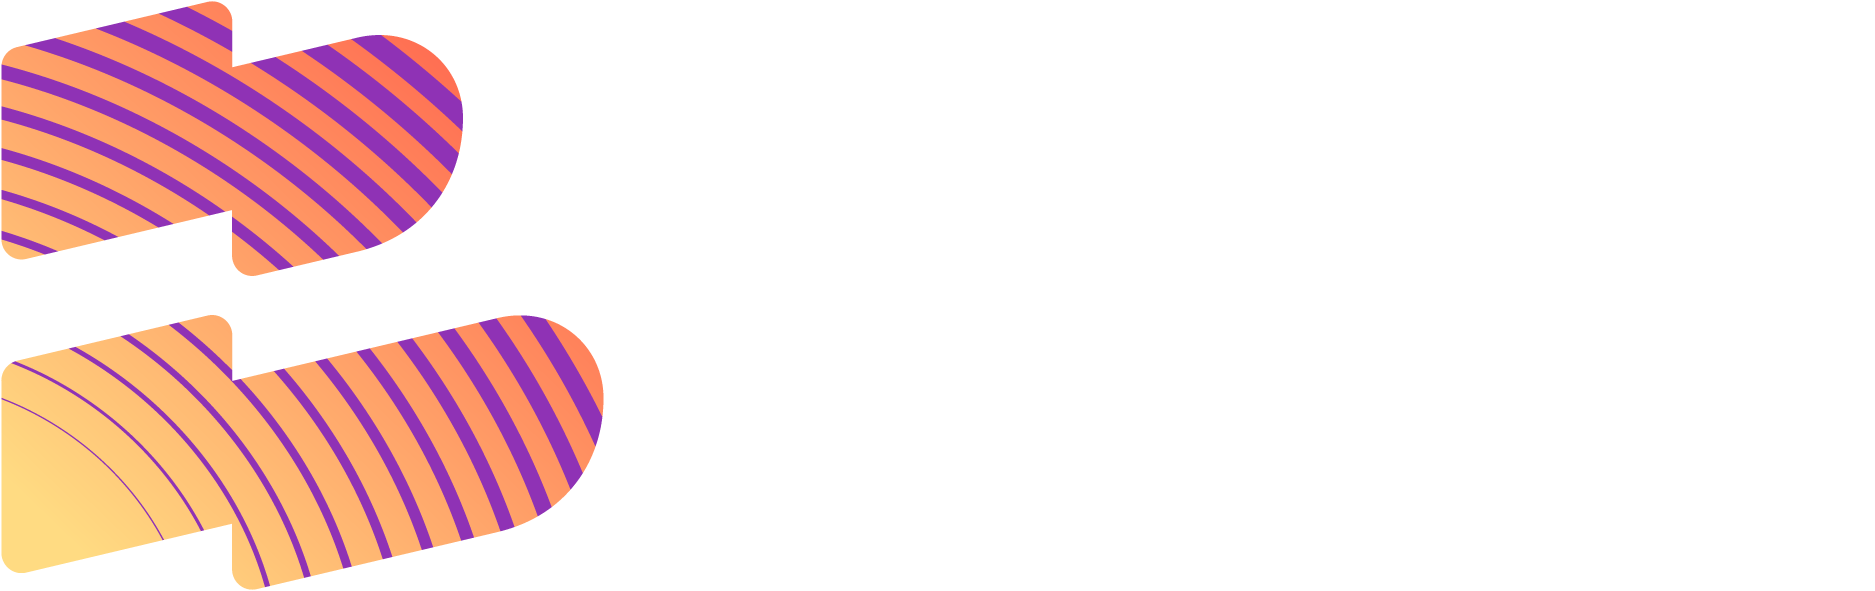 Boomcasino logo